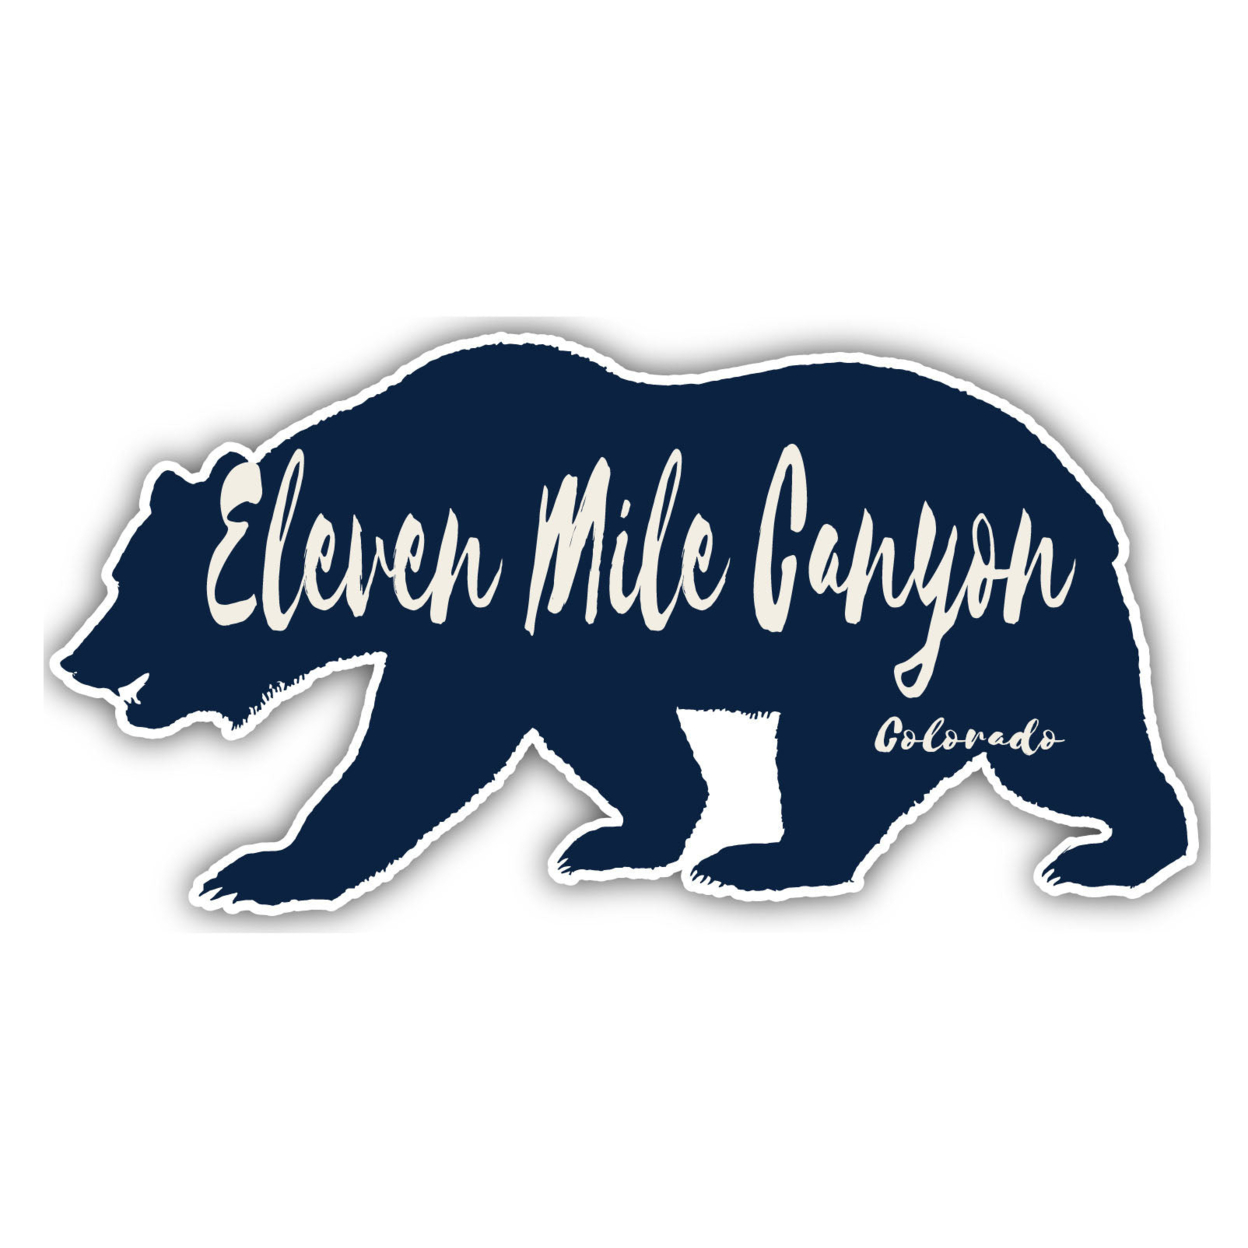 Eleven Mile Canyon Colorado Souvenir Decorative Stickers (Choose Theme And Size) - Single Unit, 4-Inch, Camp Life